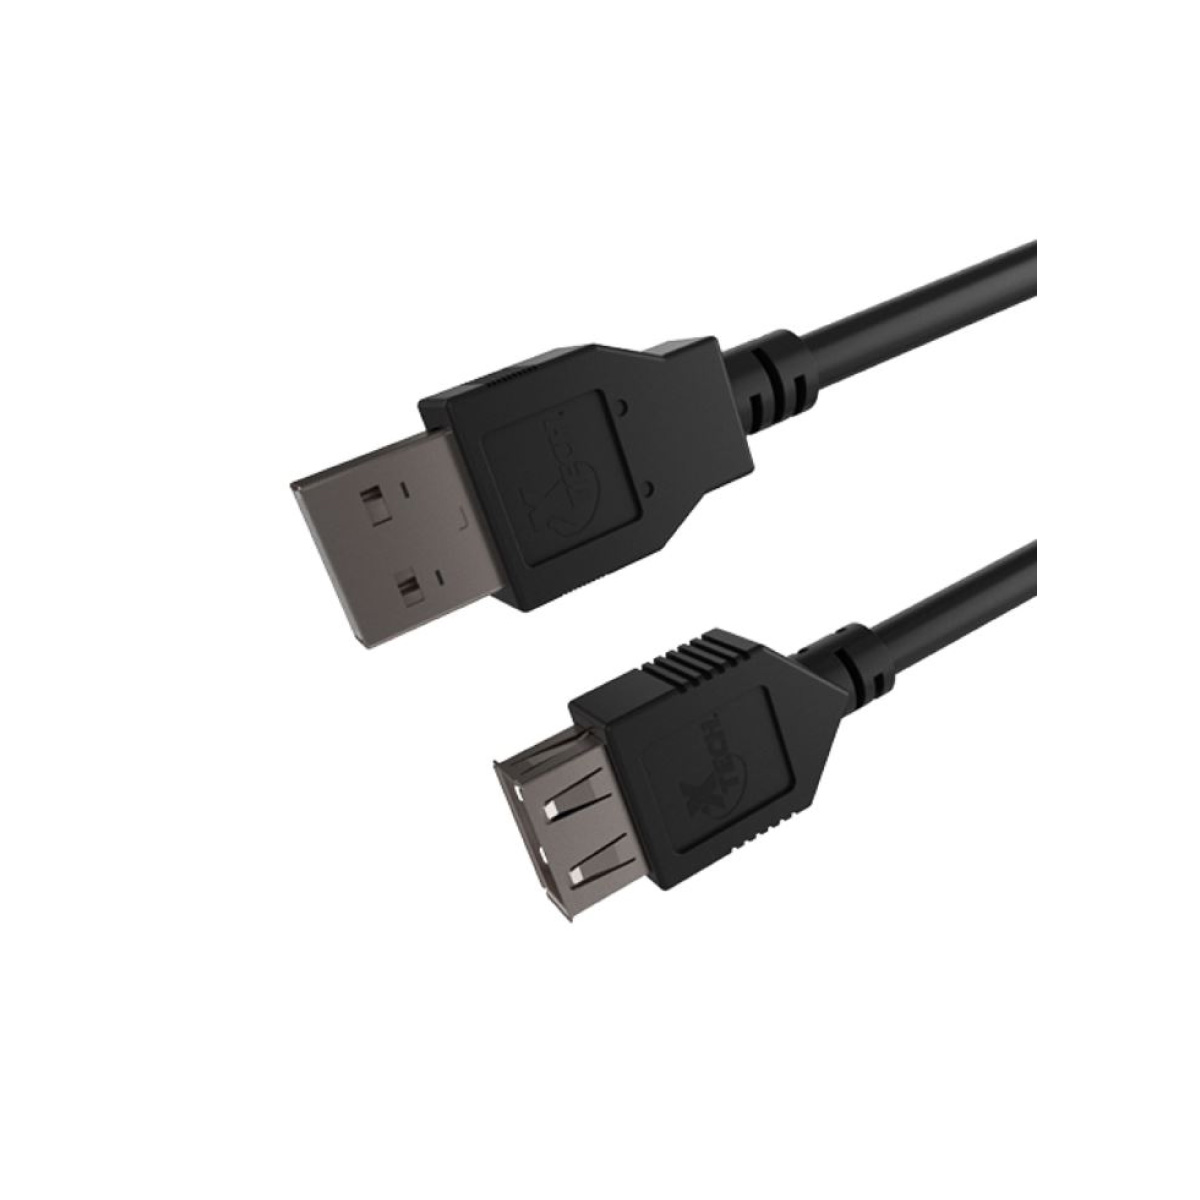 CABLE XTECH XTC-305 USB 2.0 A-MACHO A HEMBRA A 3M 30 AWG EXTENSOR